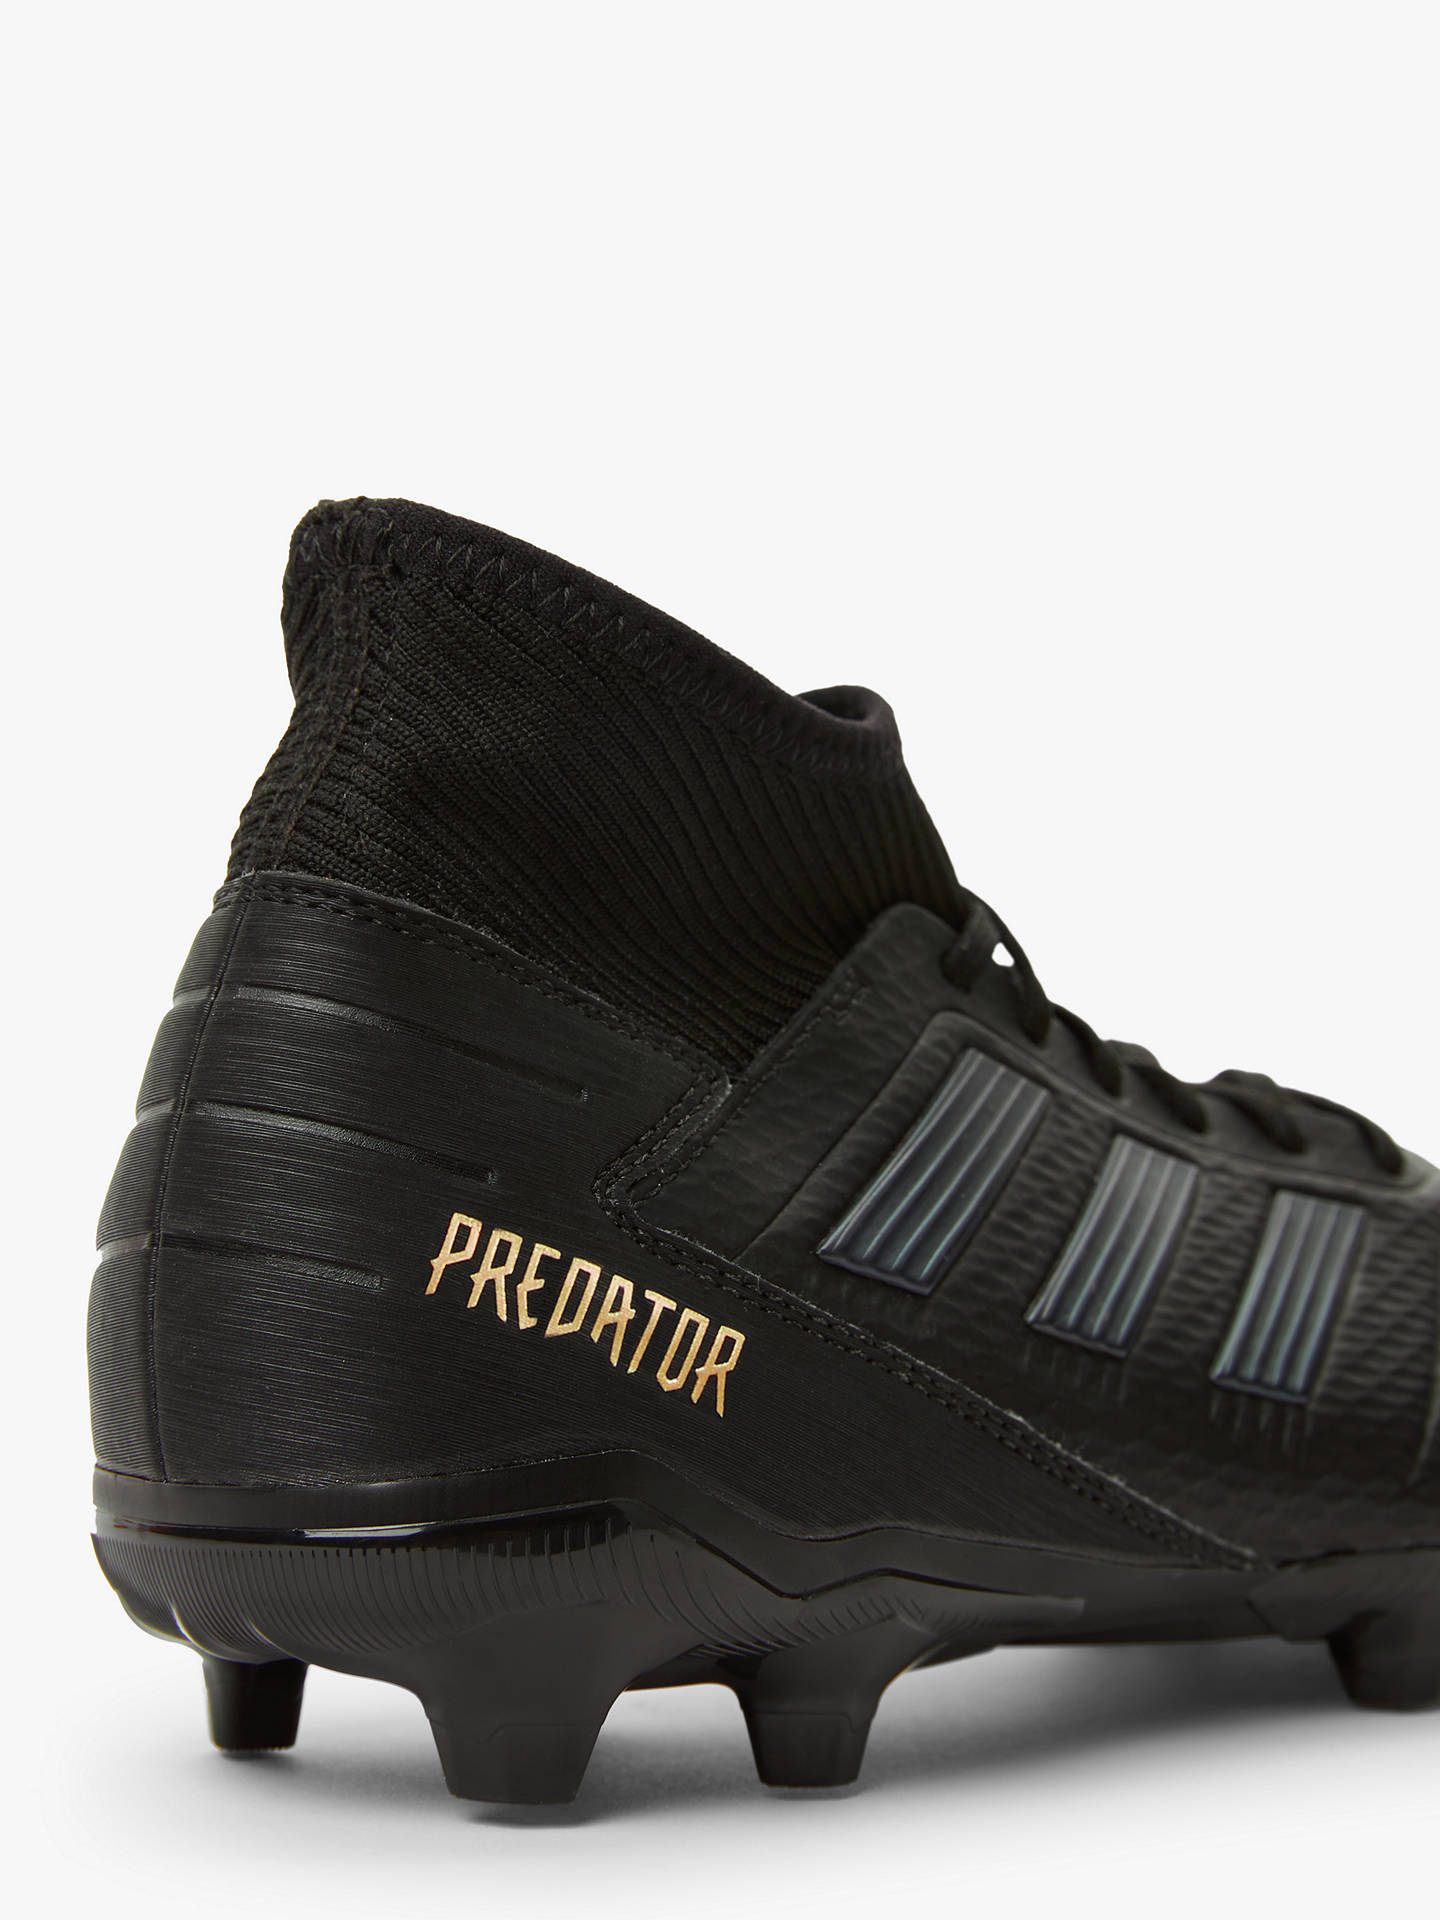 Adidas Predator 19 3 Firm Ground Football Boots Core Black Gold